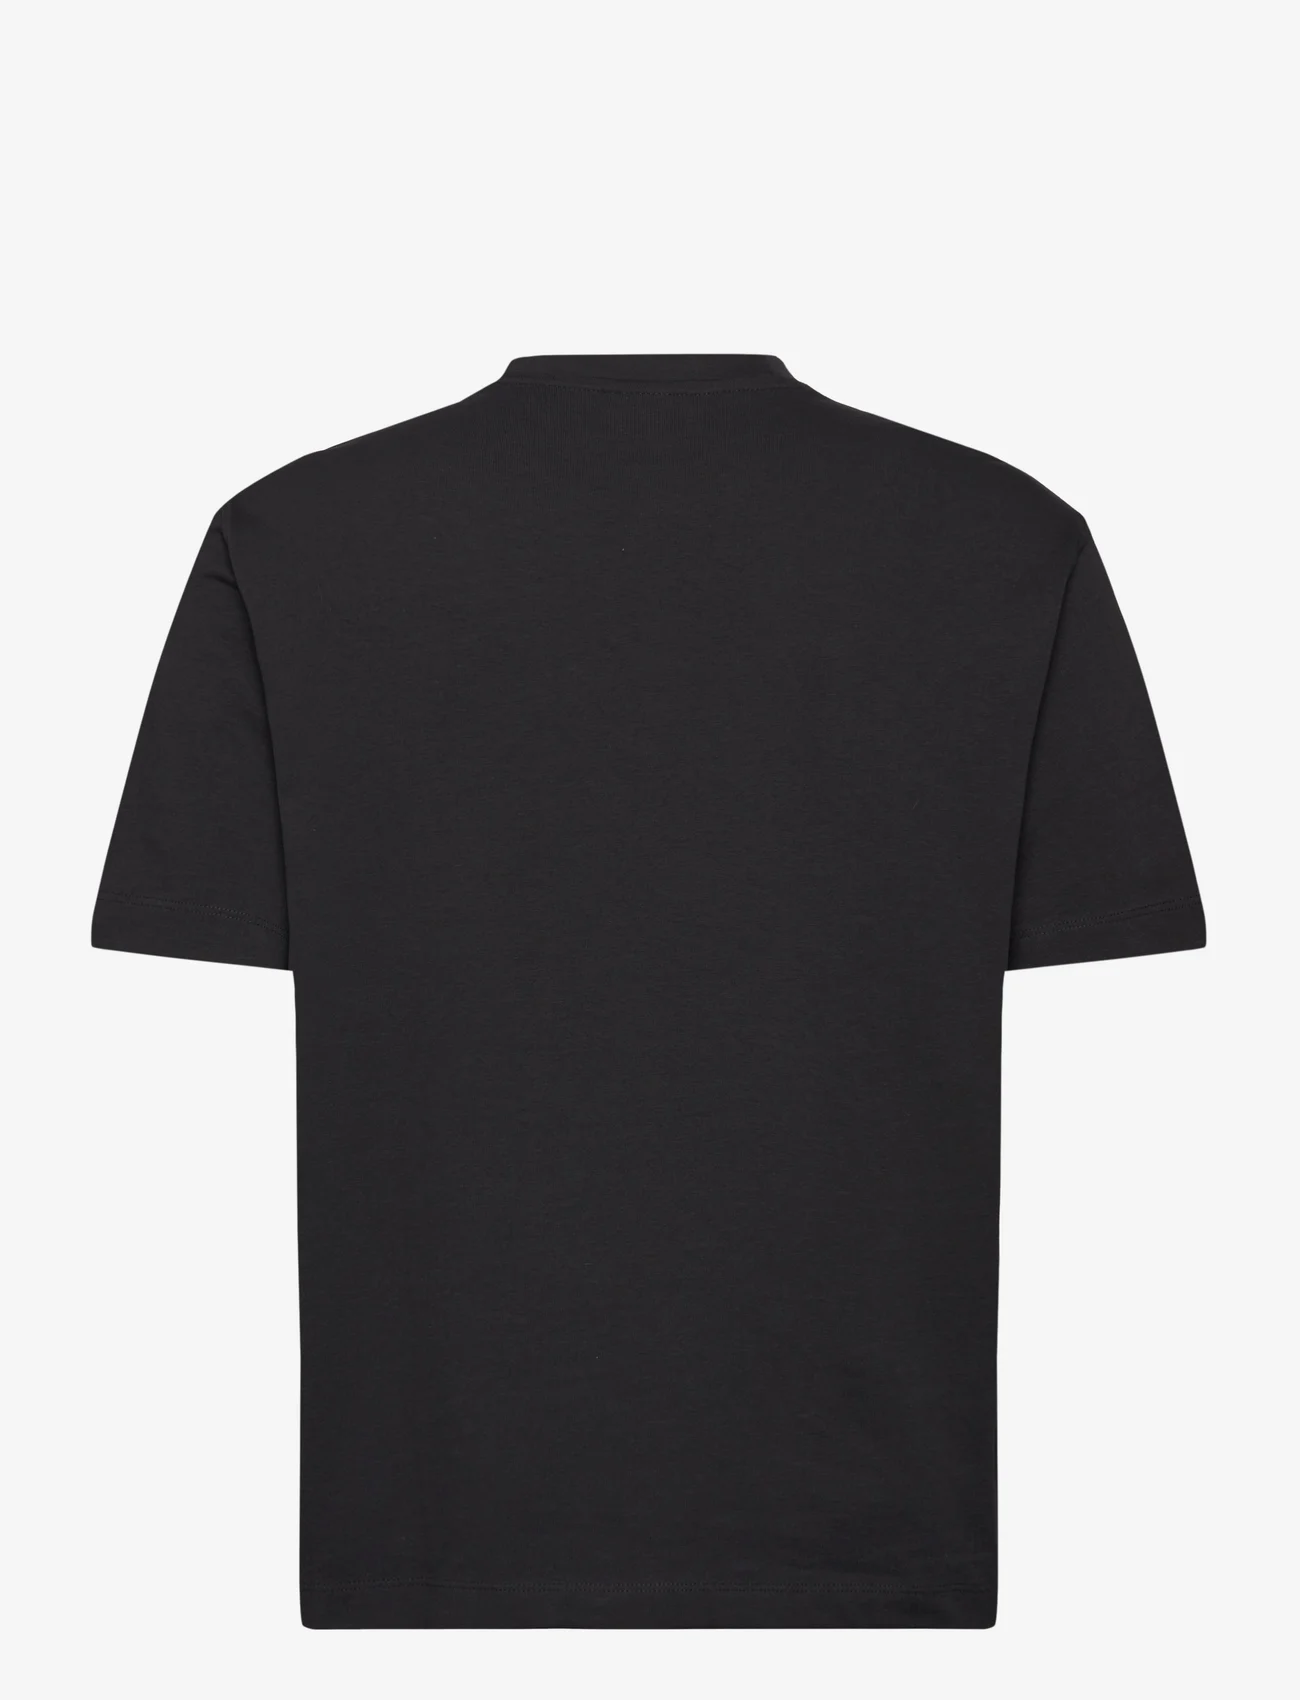 Mango - Basic 100% cotton relaxed-fit t-shirt - lägsta priserna - black - 1